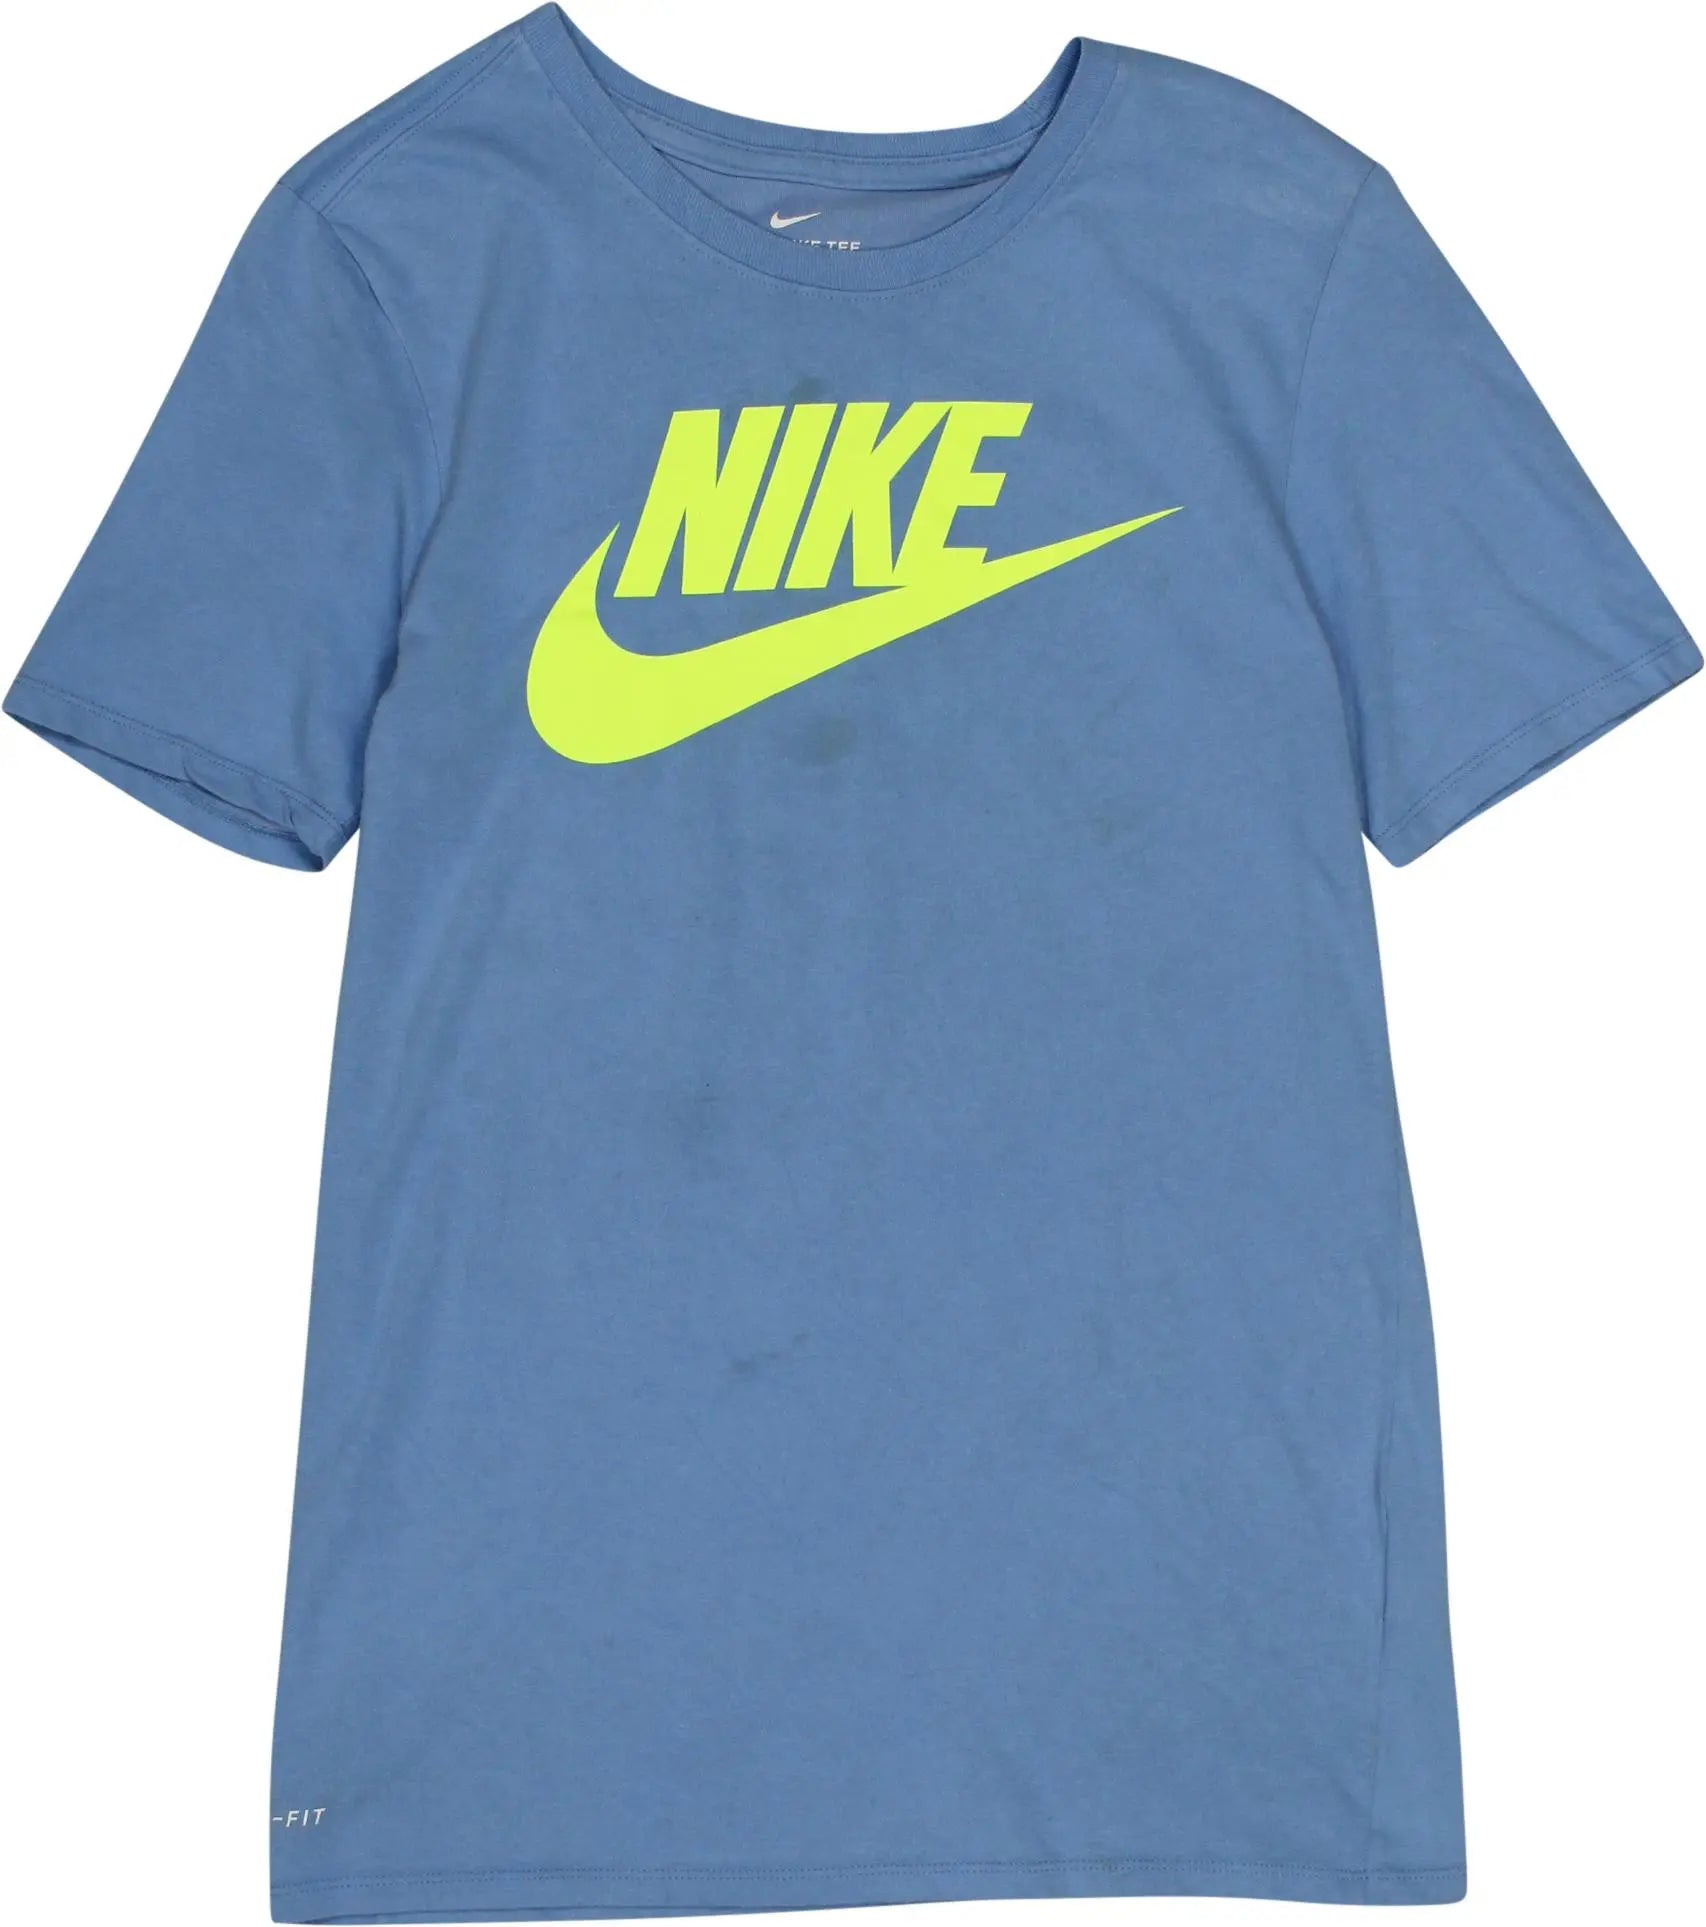 Vintage Nike Shirt 90s Tank Top Athletic Shirt Sports Tee Sporty